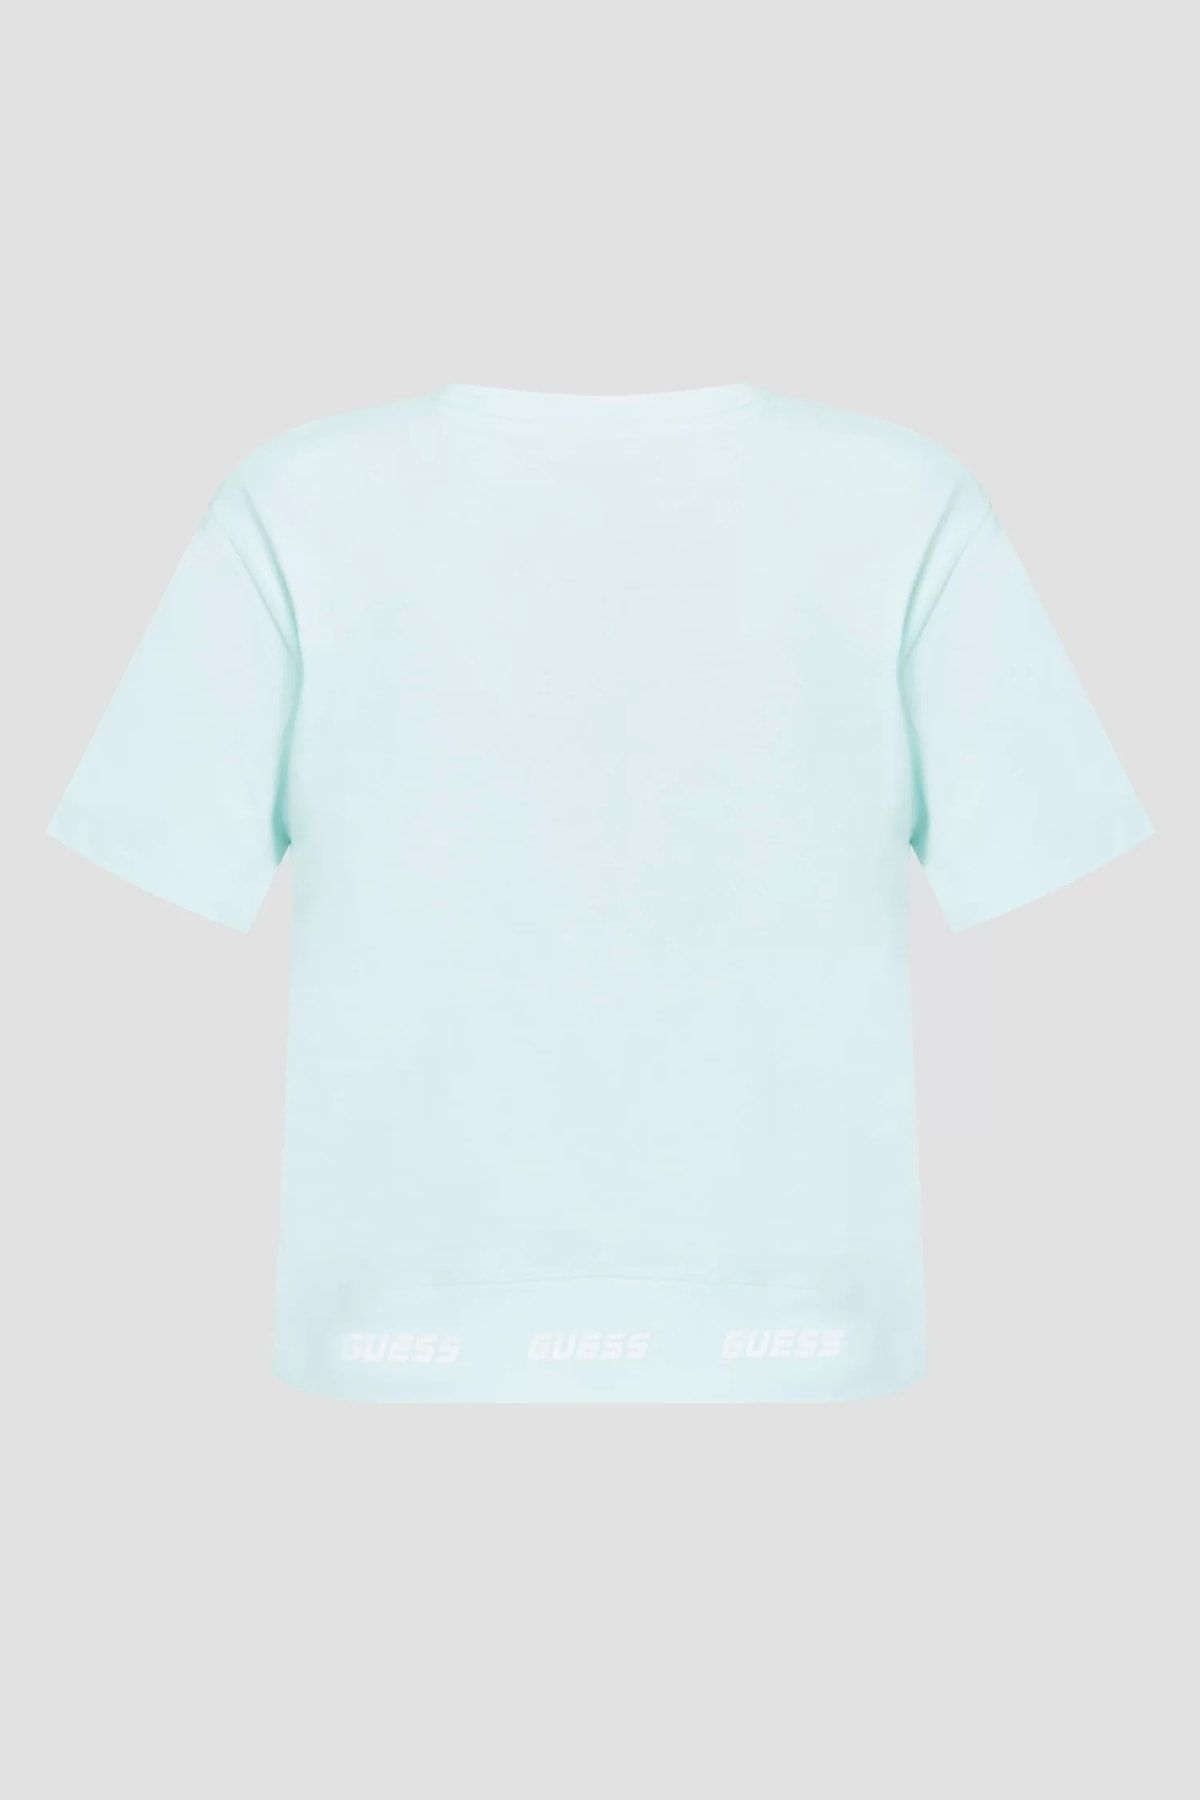 Guess تی شرت زنانه چاپ شده با لوگوی Mint Color Guess